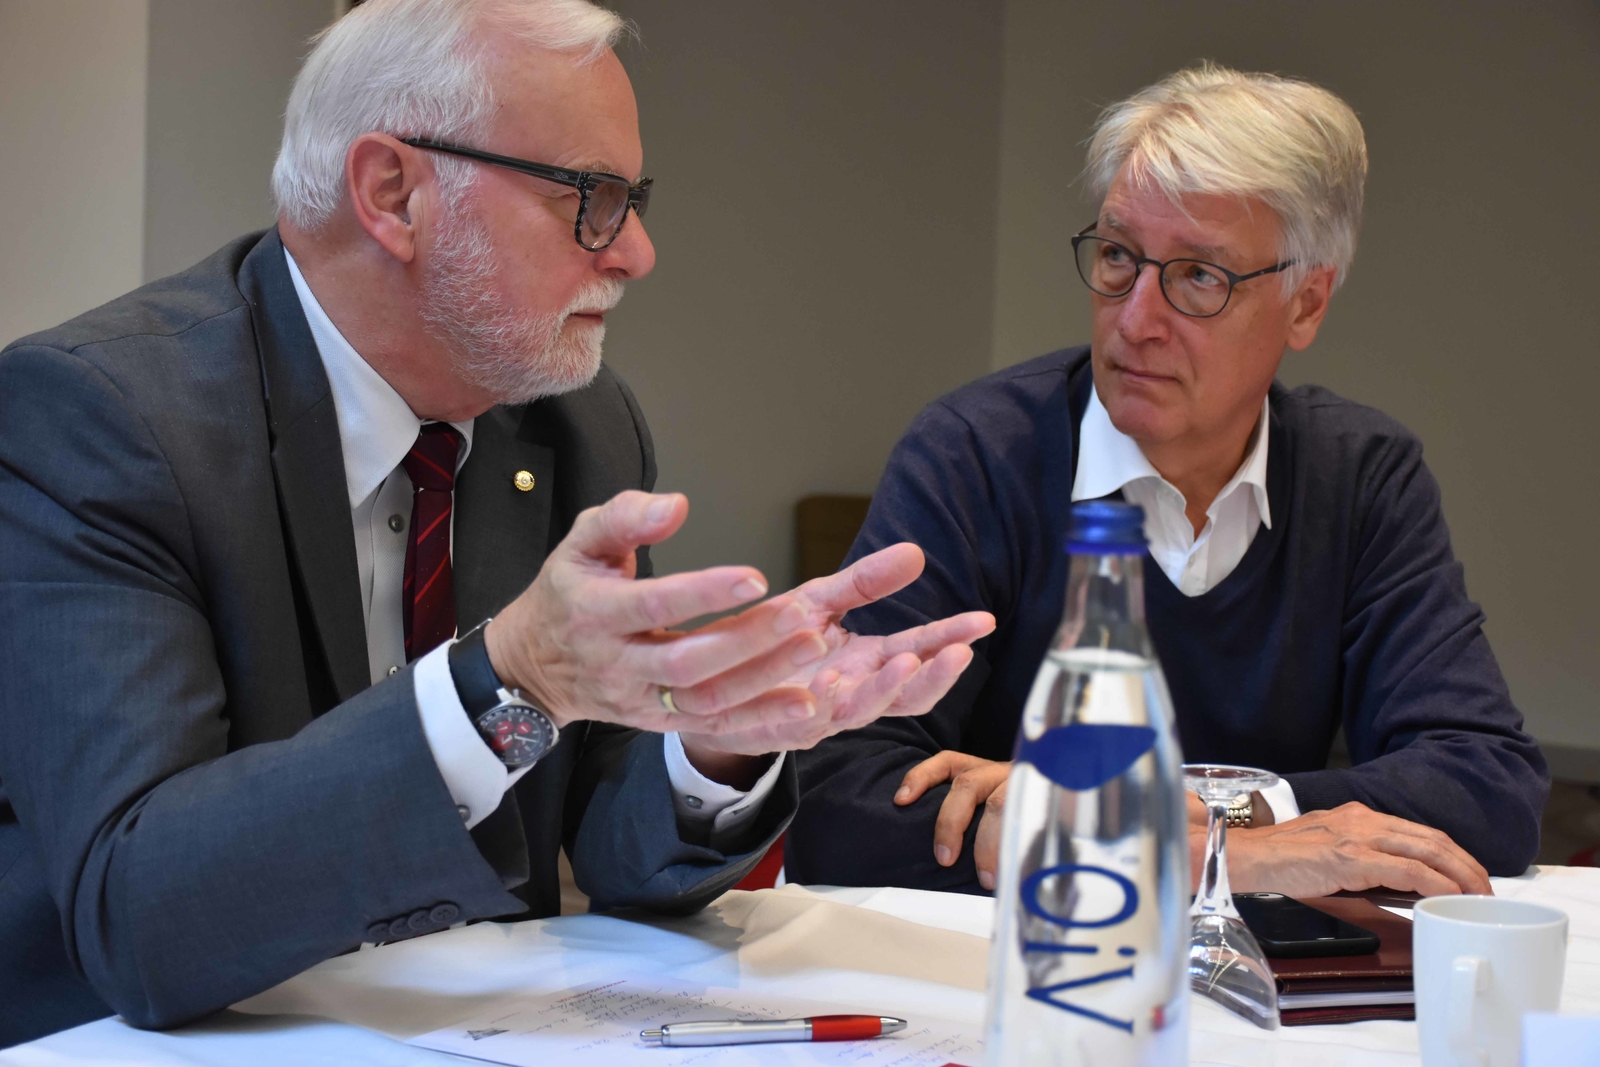 Diskussion, DGR, Herbsttagung, Governors, 2017/18, 2018/19, Düsseldorf